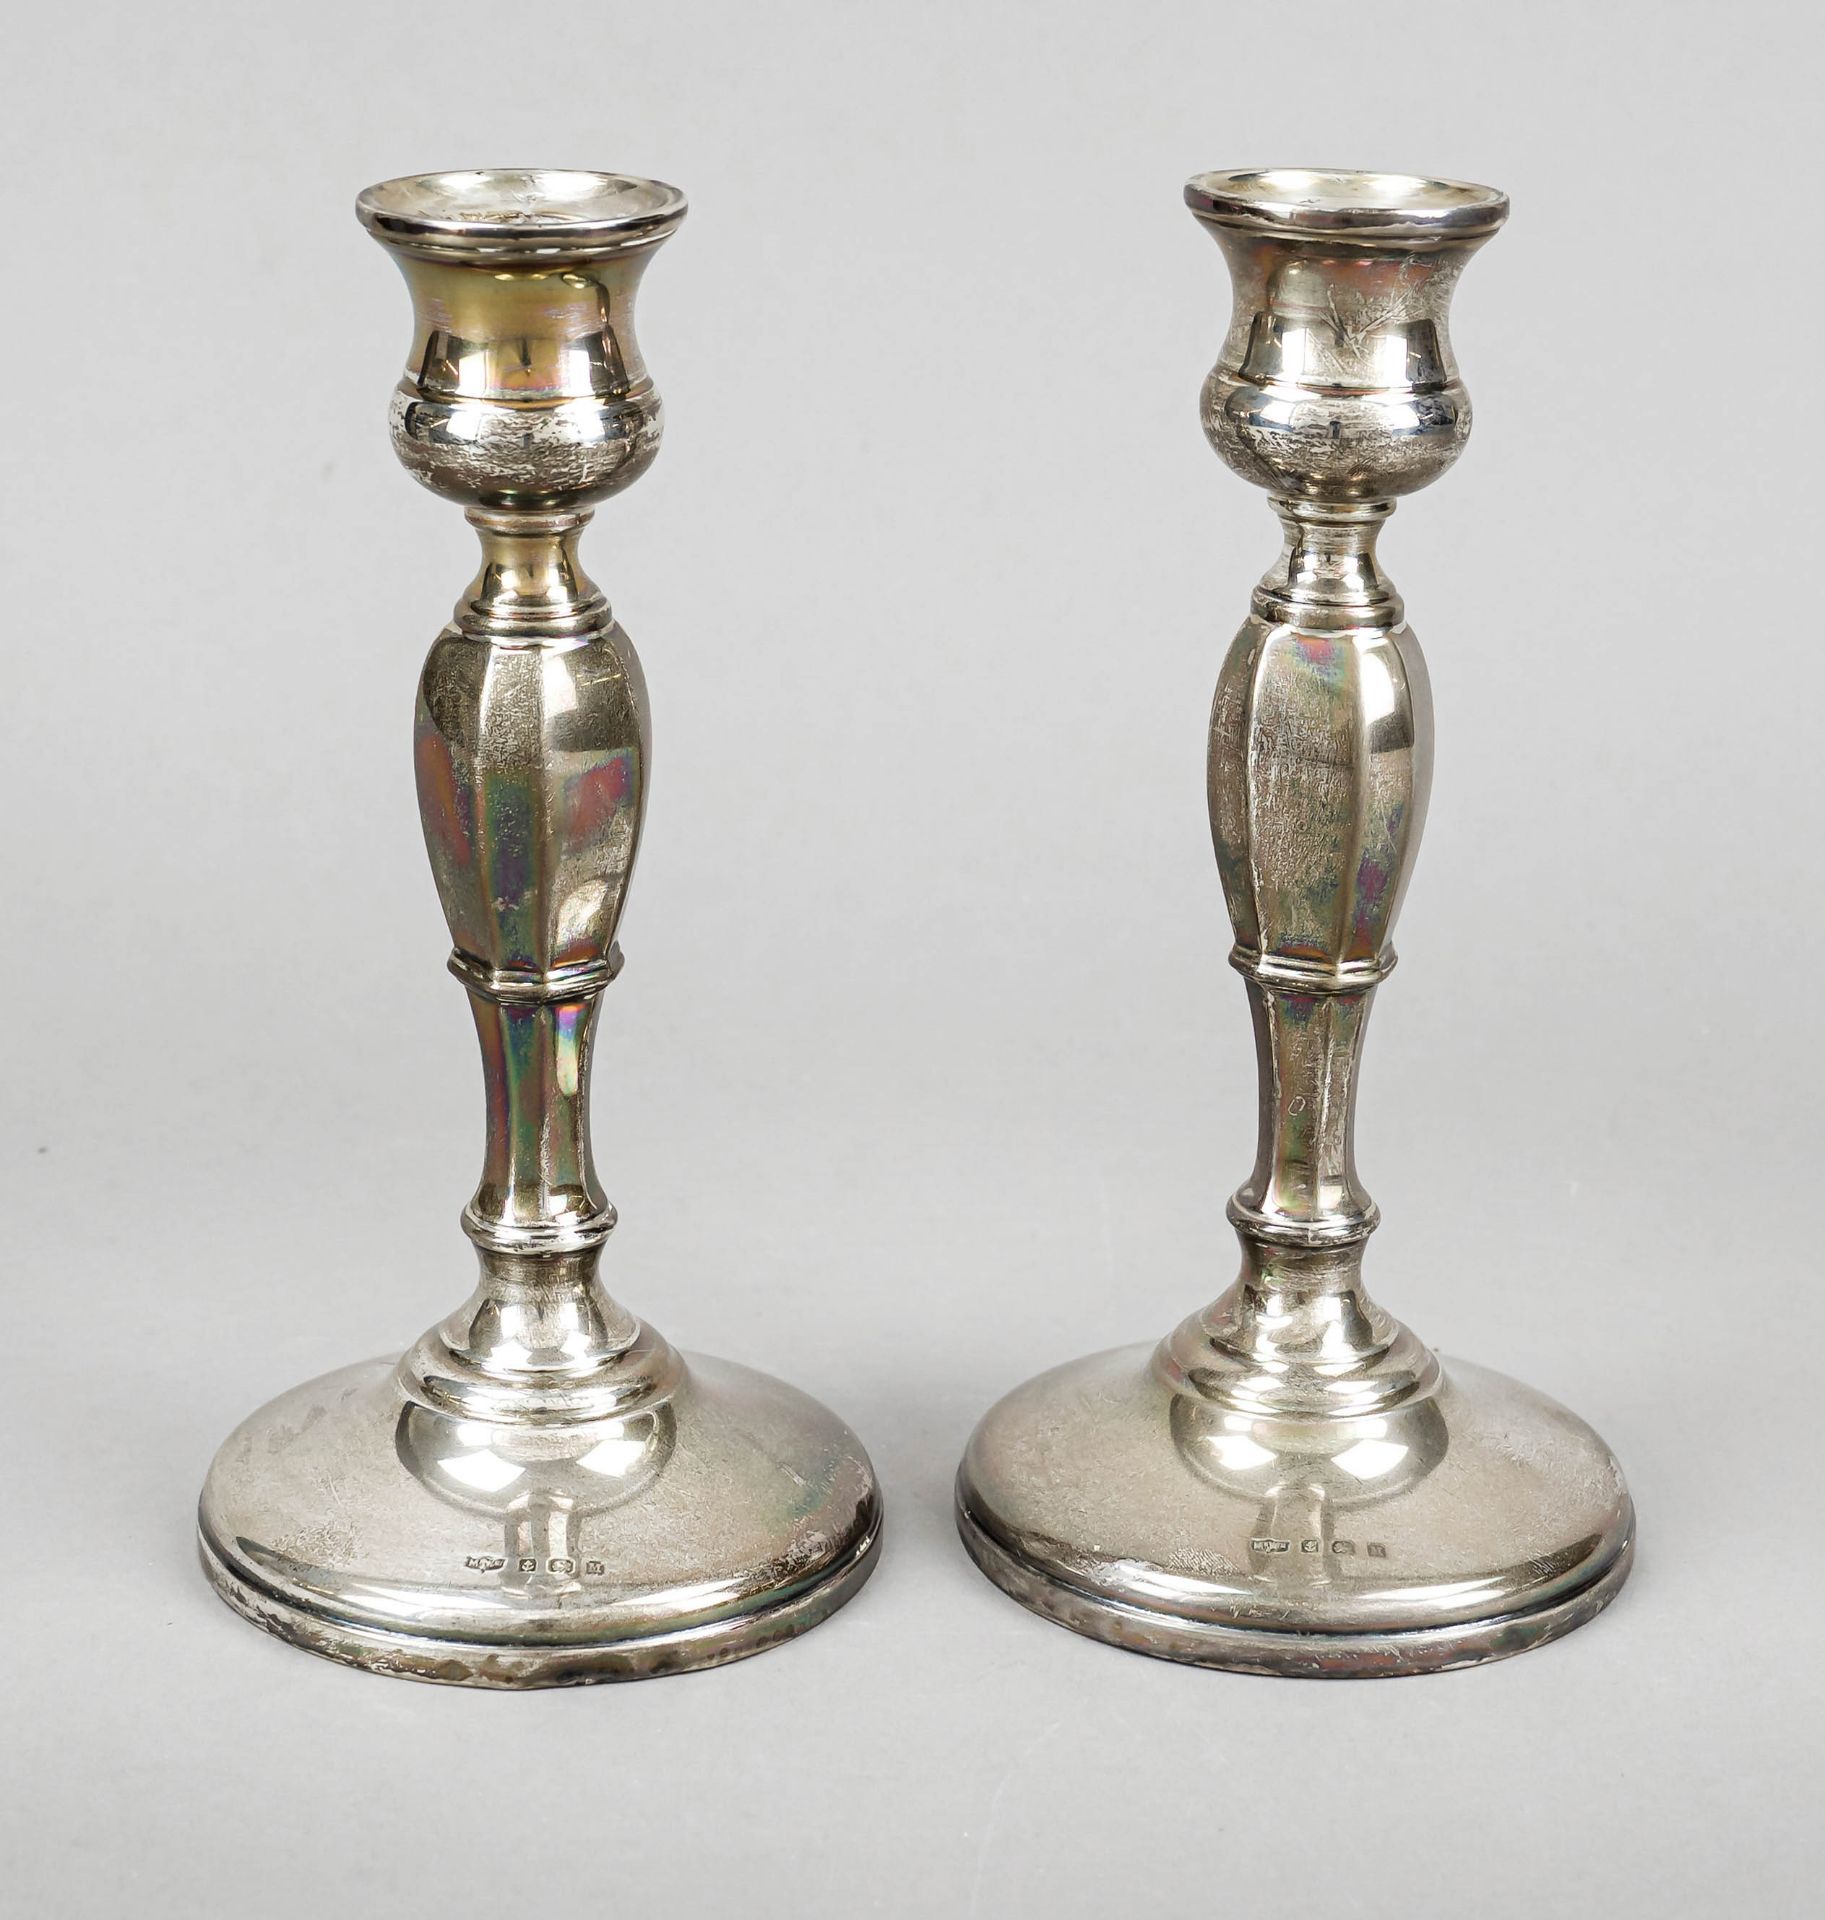 Pair of candlesticks, England, 1936, maker's mark Mappin & Webb Ltd, Birmingham, sterling silver